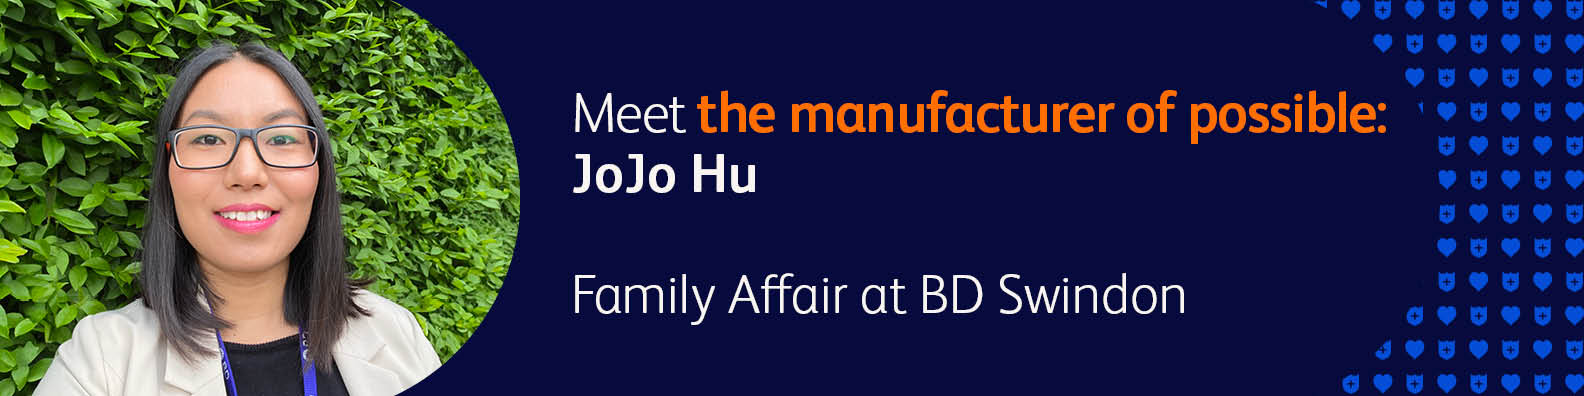 JoJo Hu - Supply Chain Project Engineer at BD